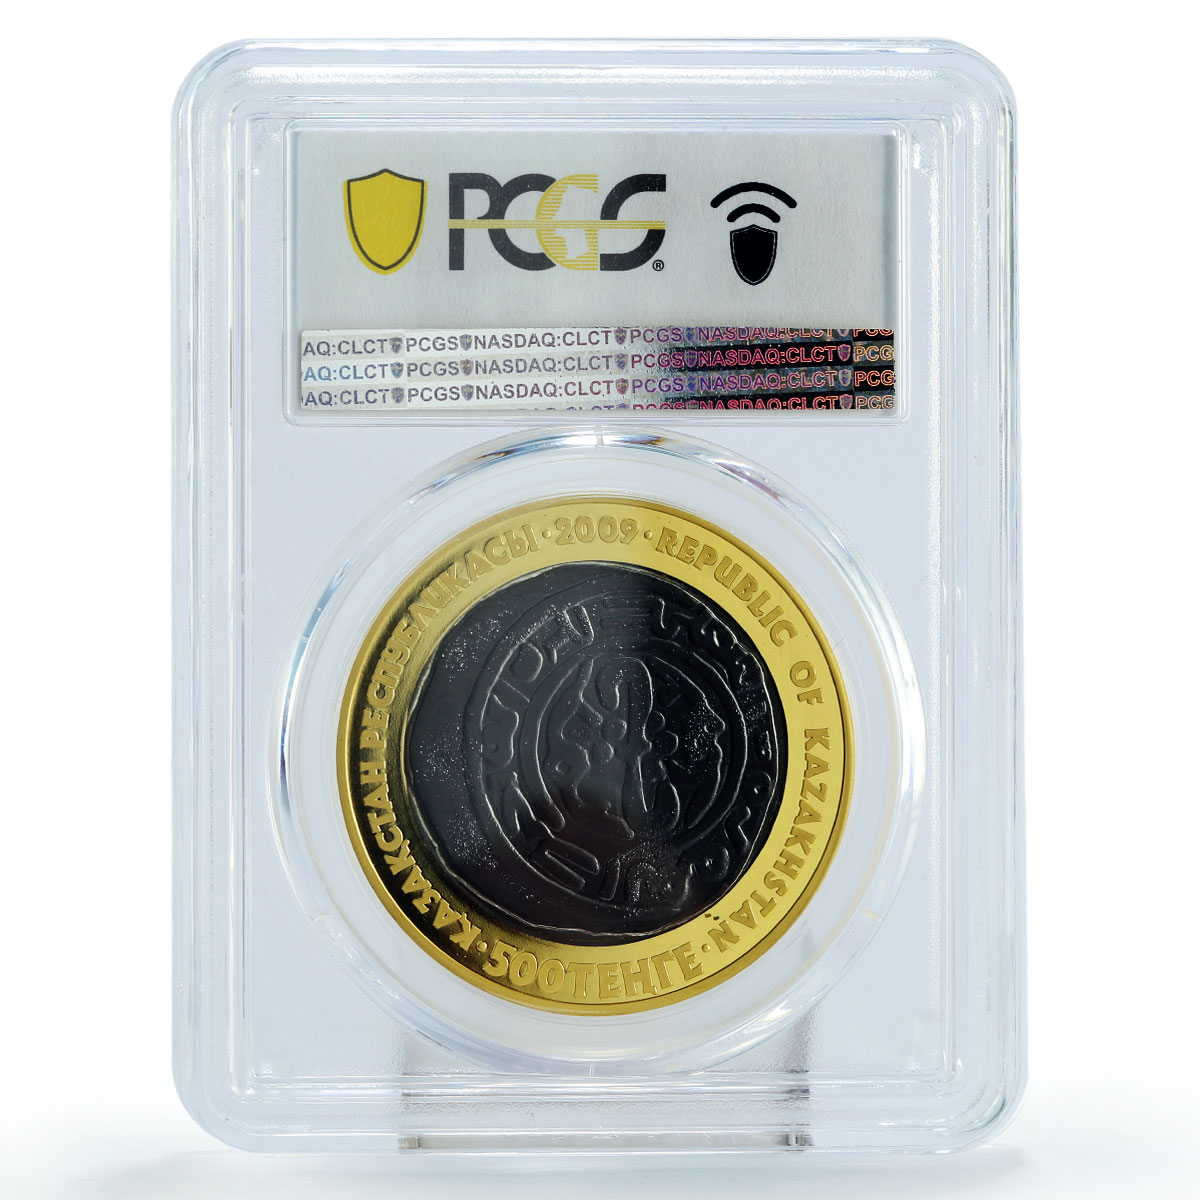 Kazakhstan 500 tenge Coins of Old Design Almaty Coin PR70 PCGS silver coin 2009